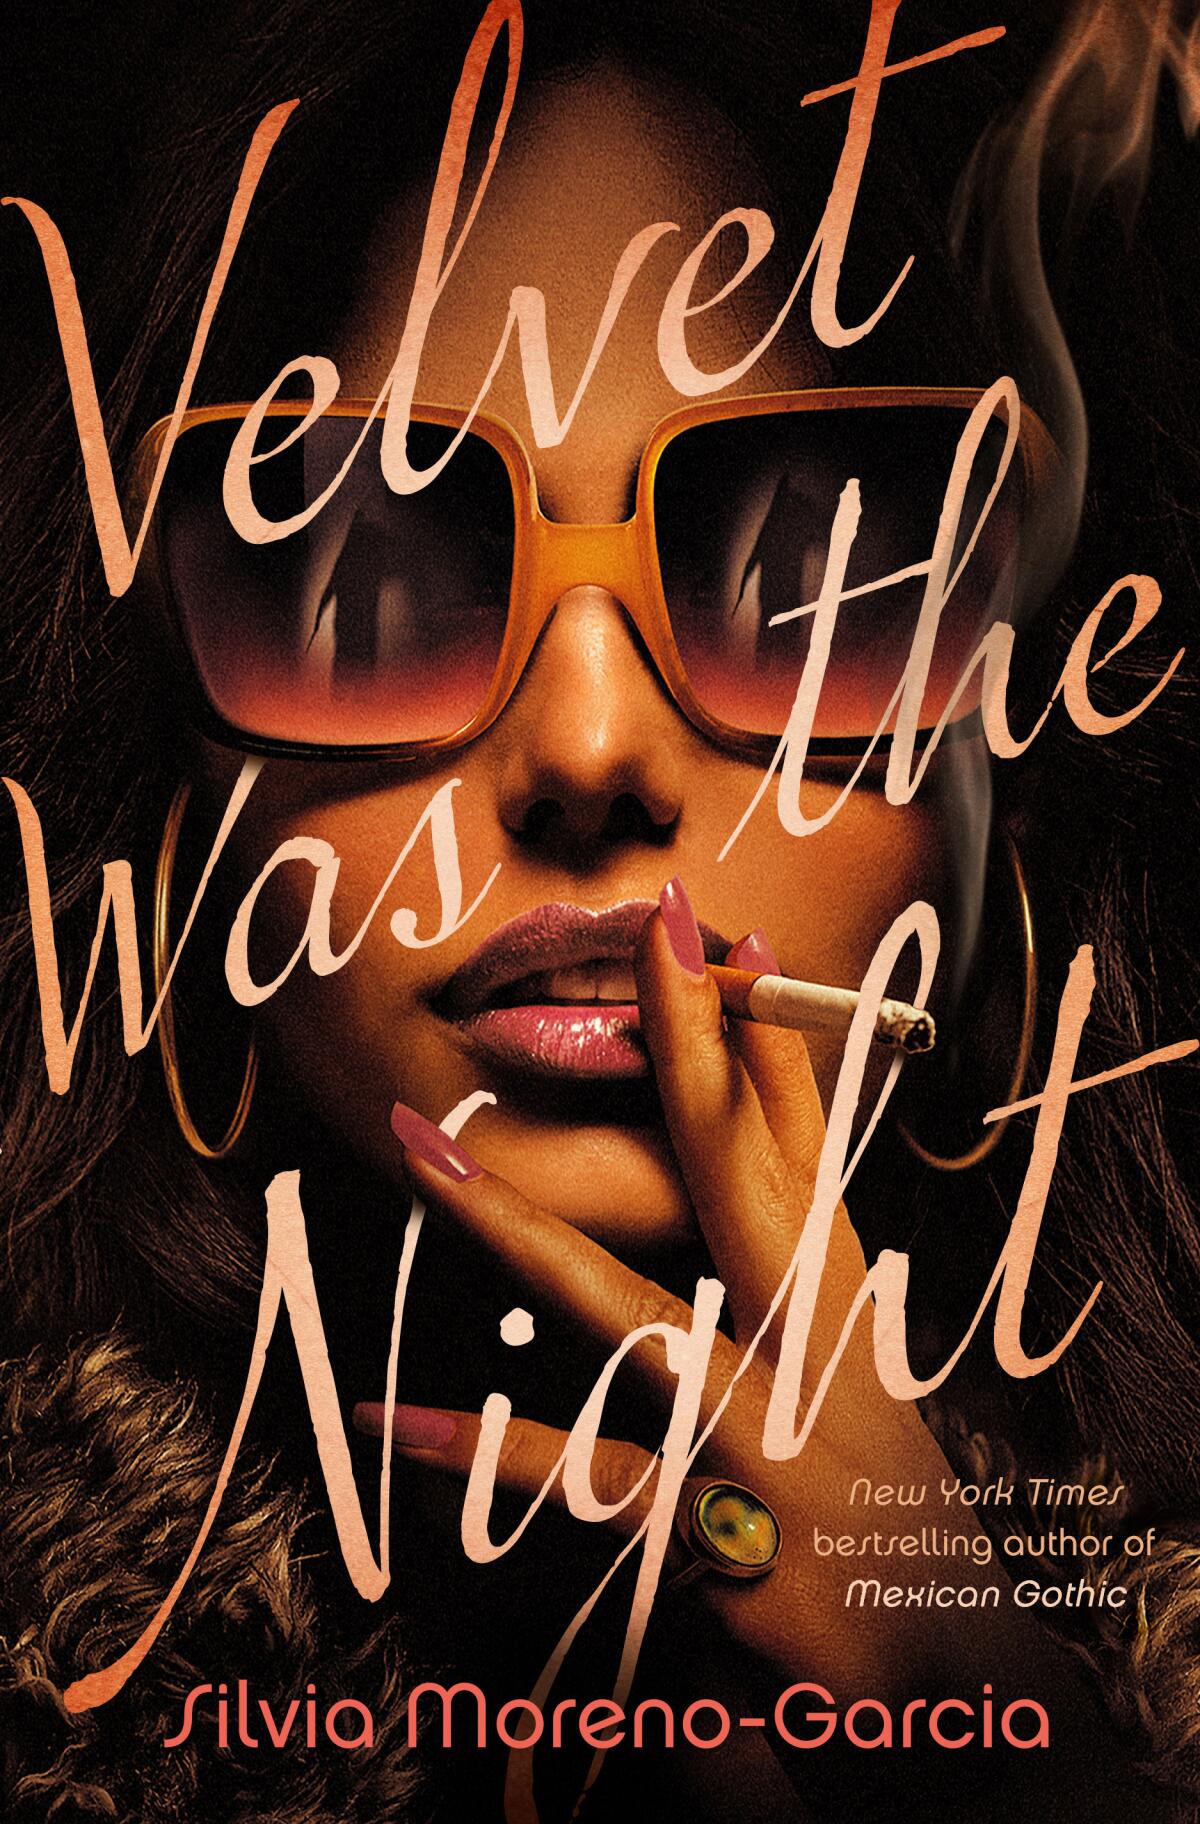 The book cover of Silvia Moreno-Garcia's "Velvet Was the Night"